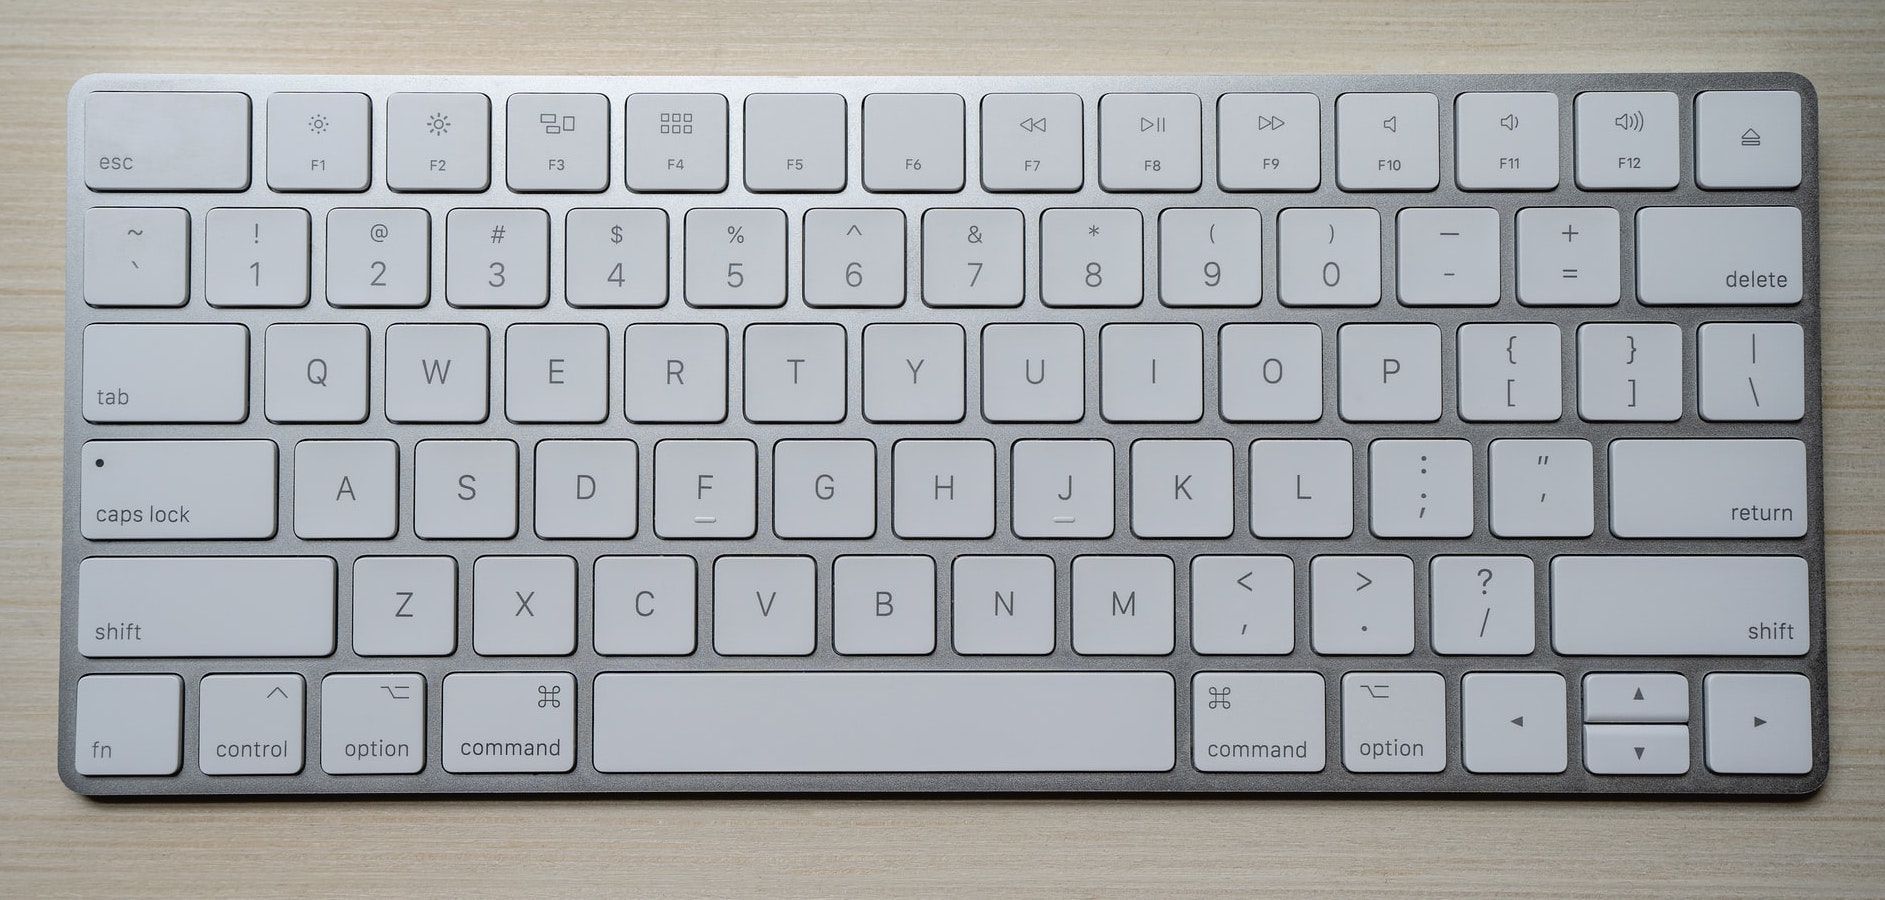 a mac keyboard layout